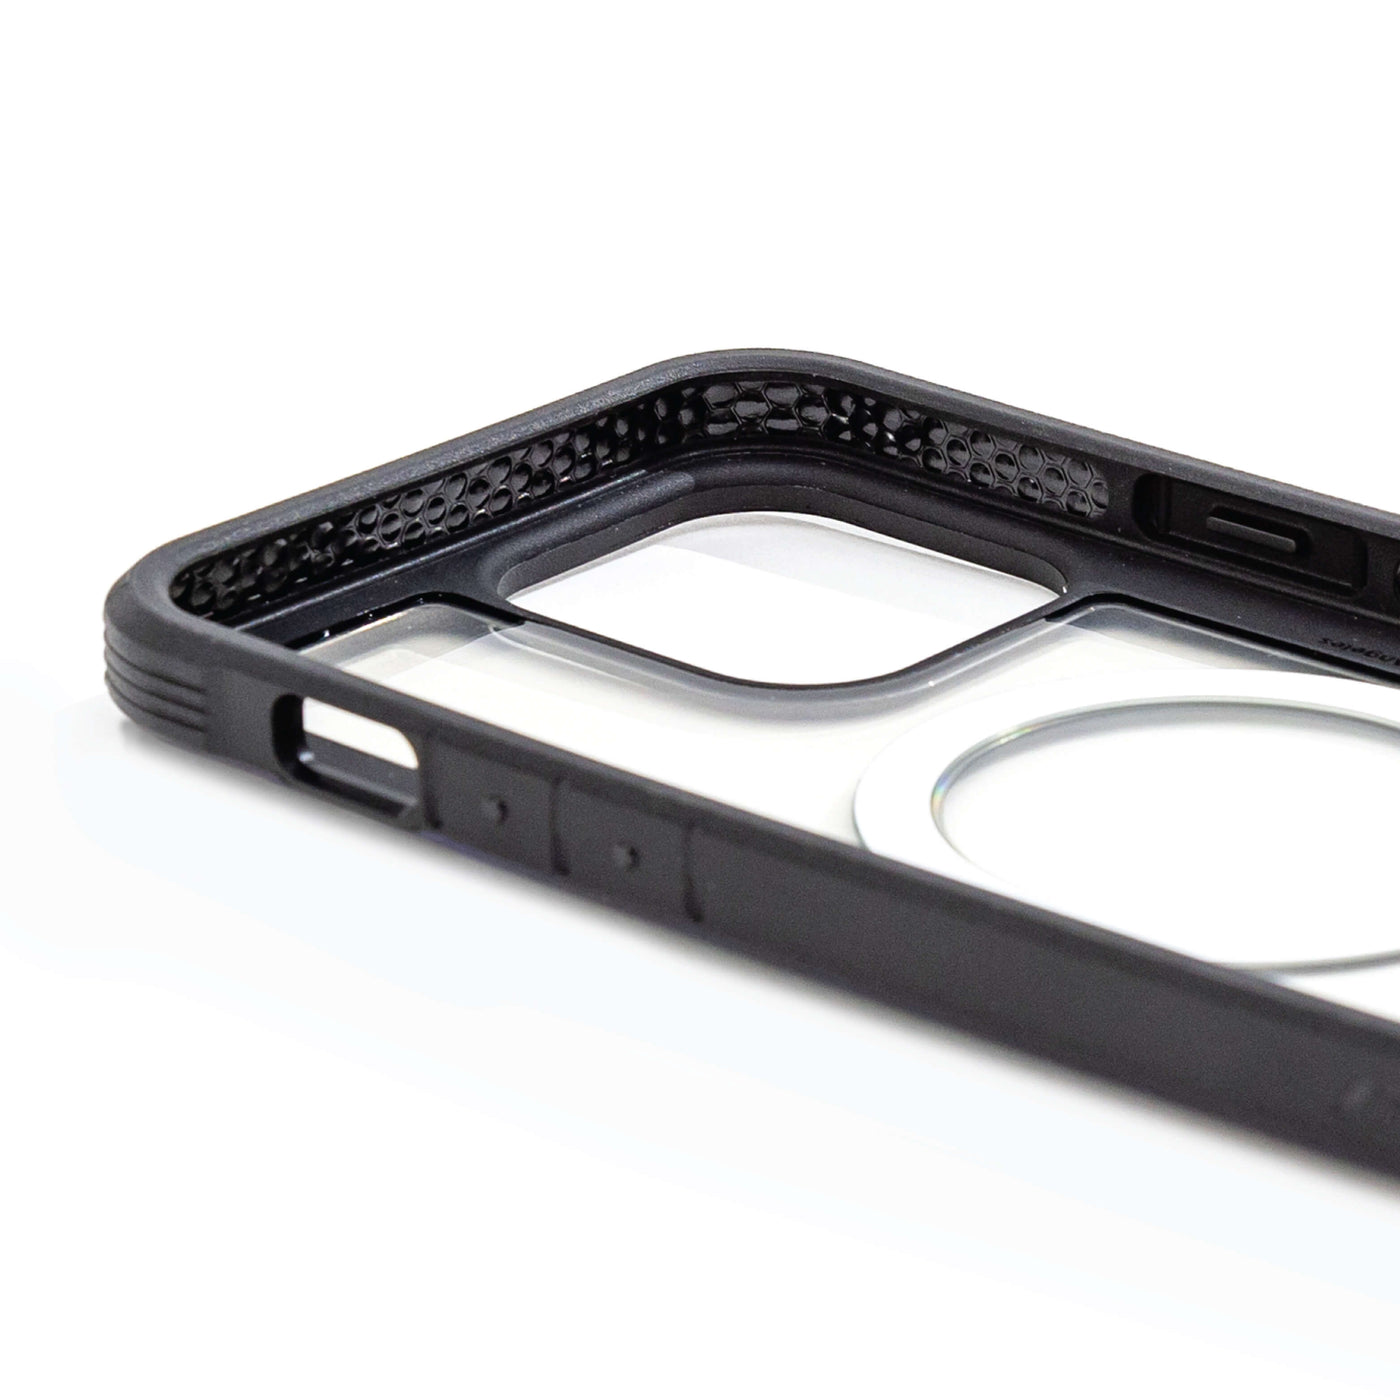 iPhone 14 Pro / iPhone 13 Pro Case - Shield 2.0 Onyx Black